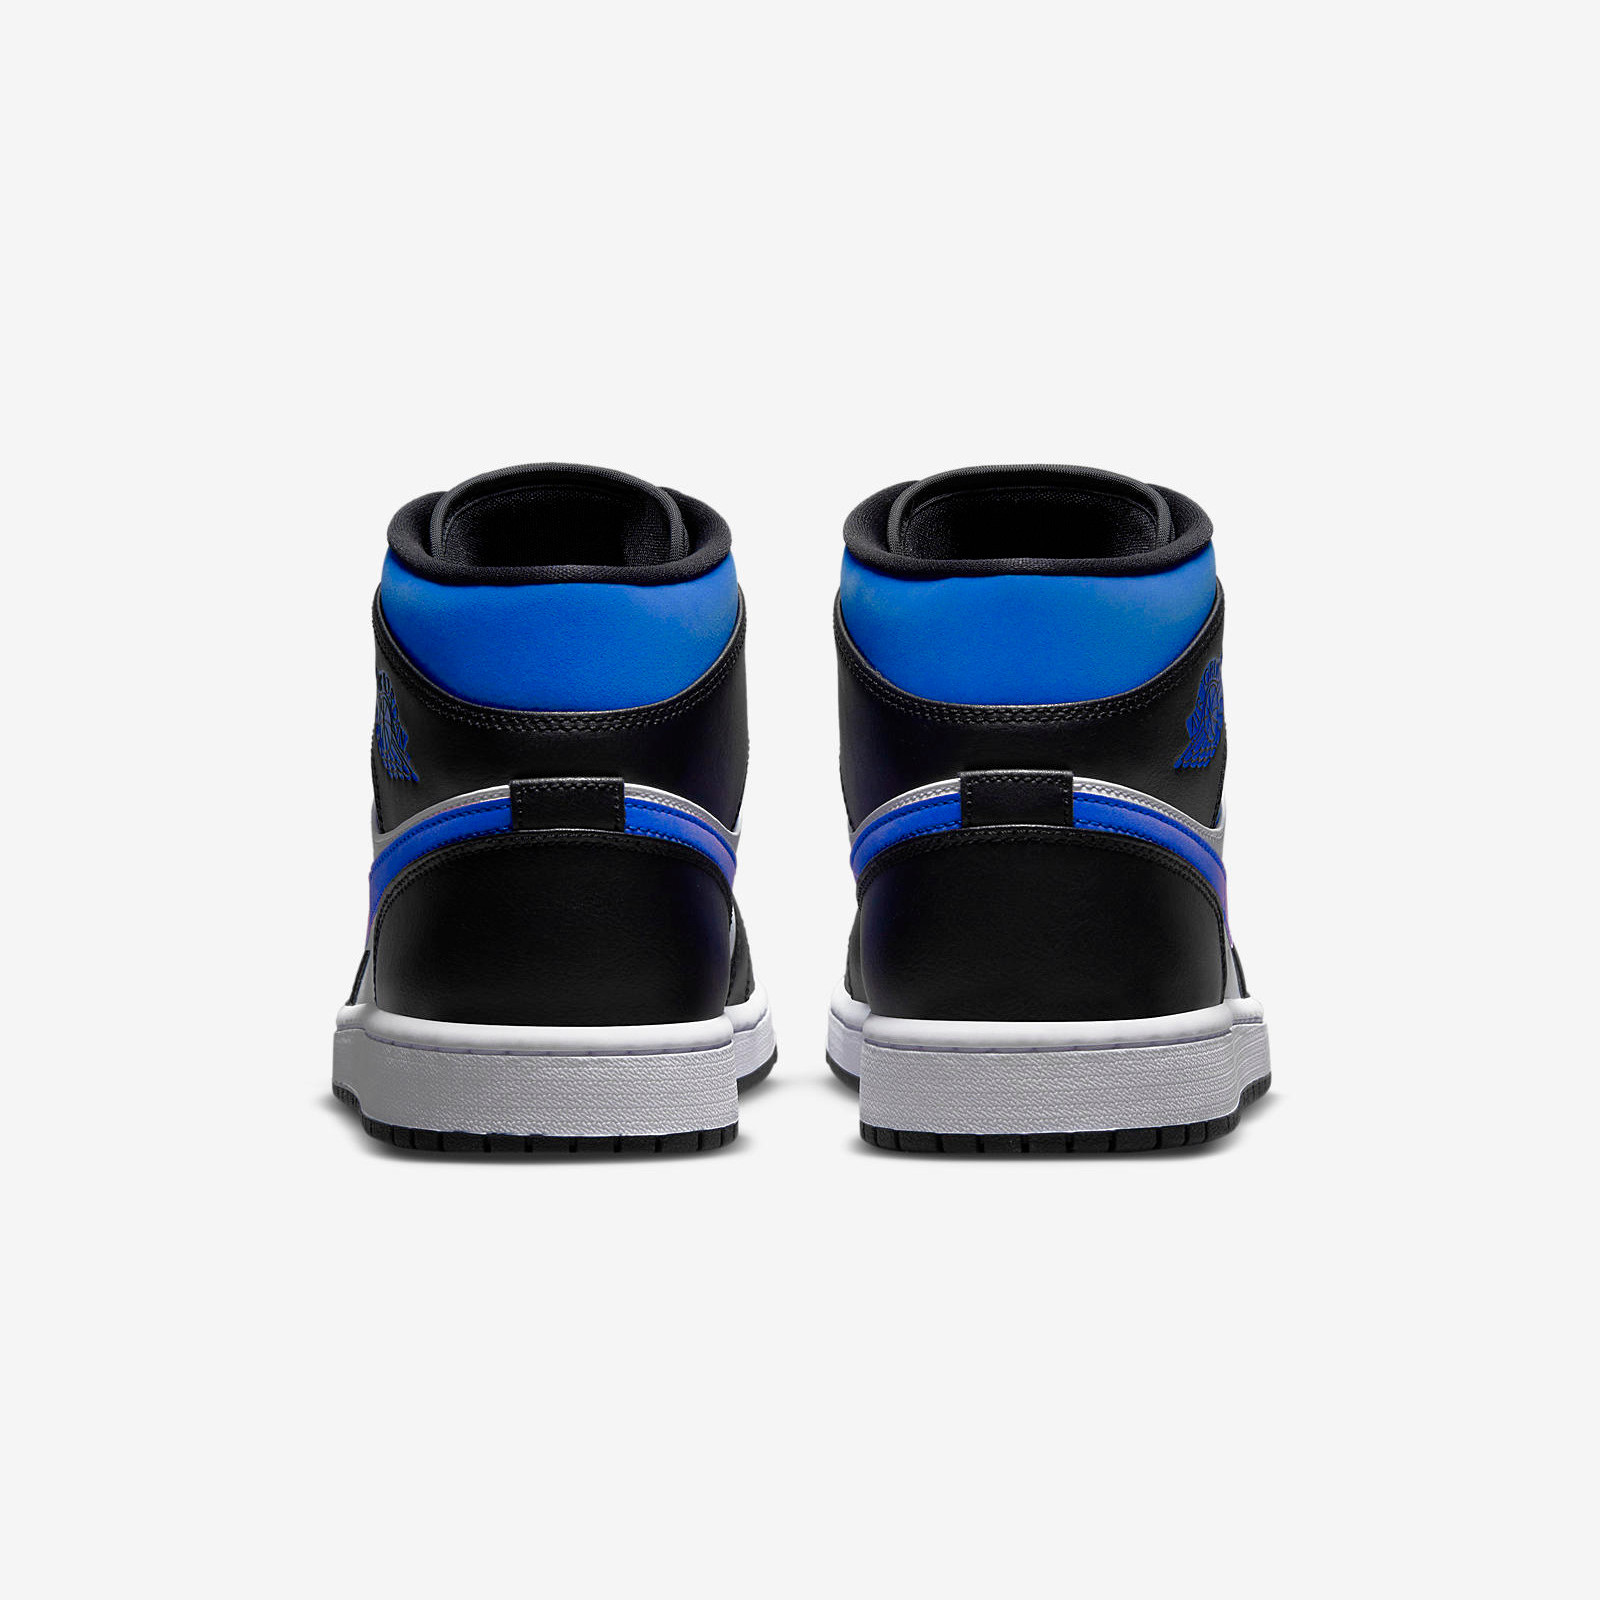 Air Jordan 1 Mid
White / Blue / Black